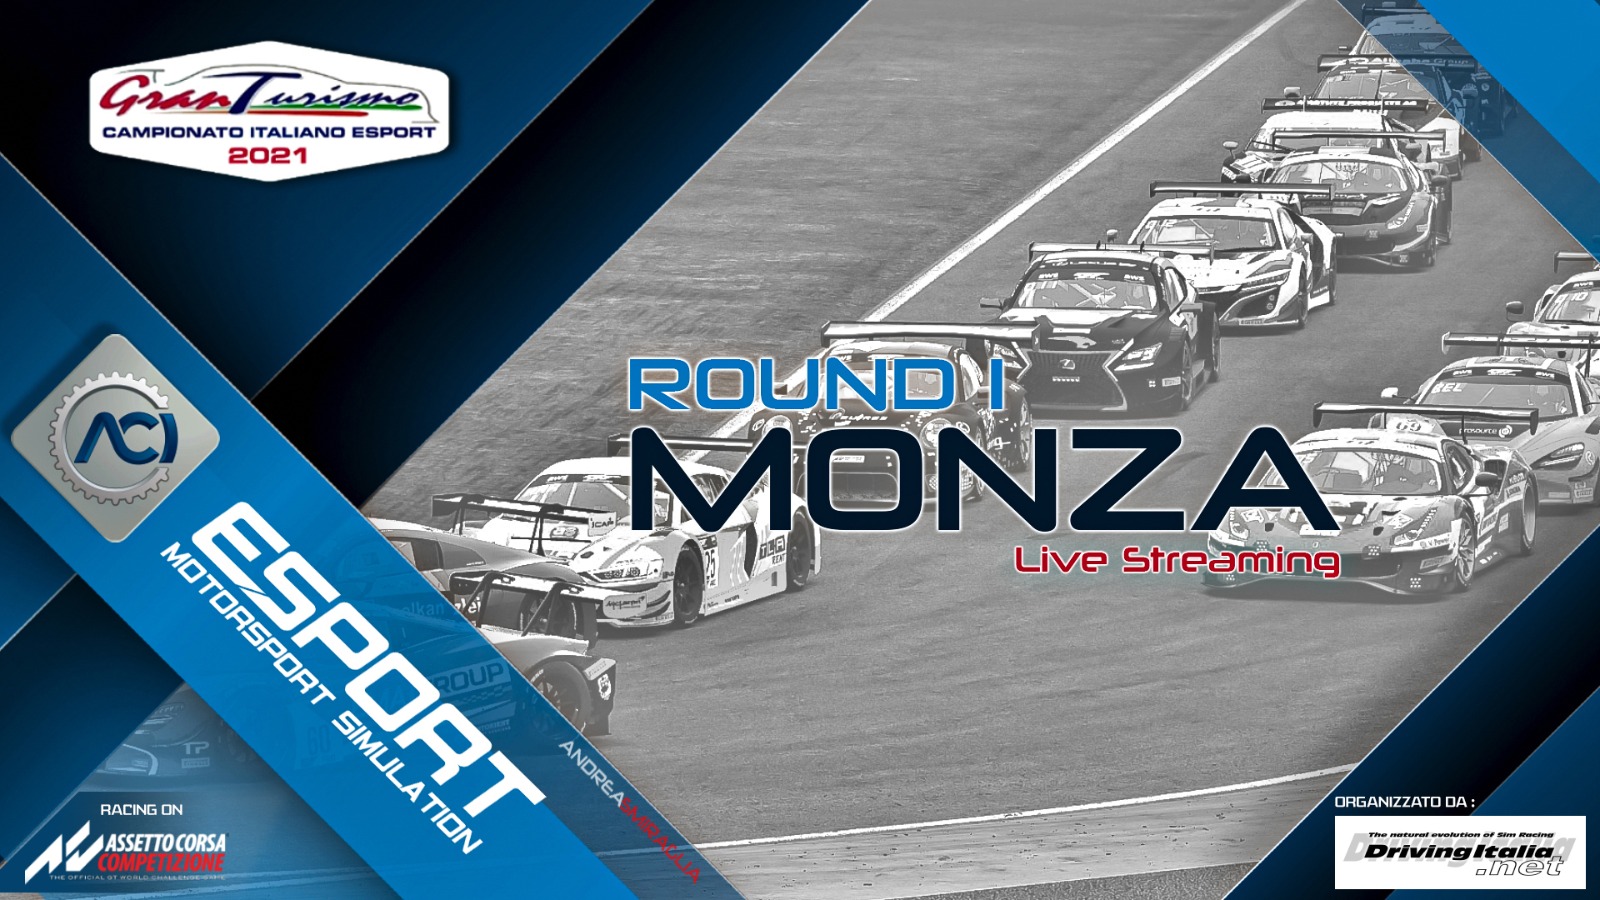 More information about "CIGT ACI ESport: intervista a Paolo Muià, vincitore del round 1 a Monza"